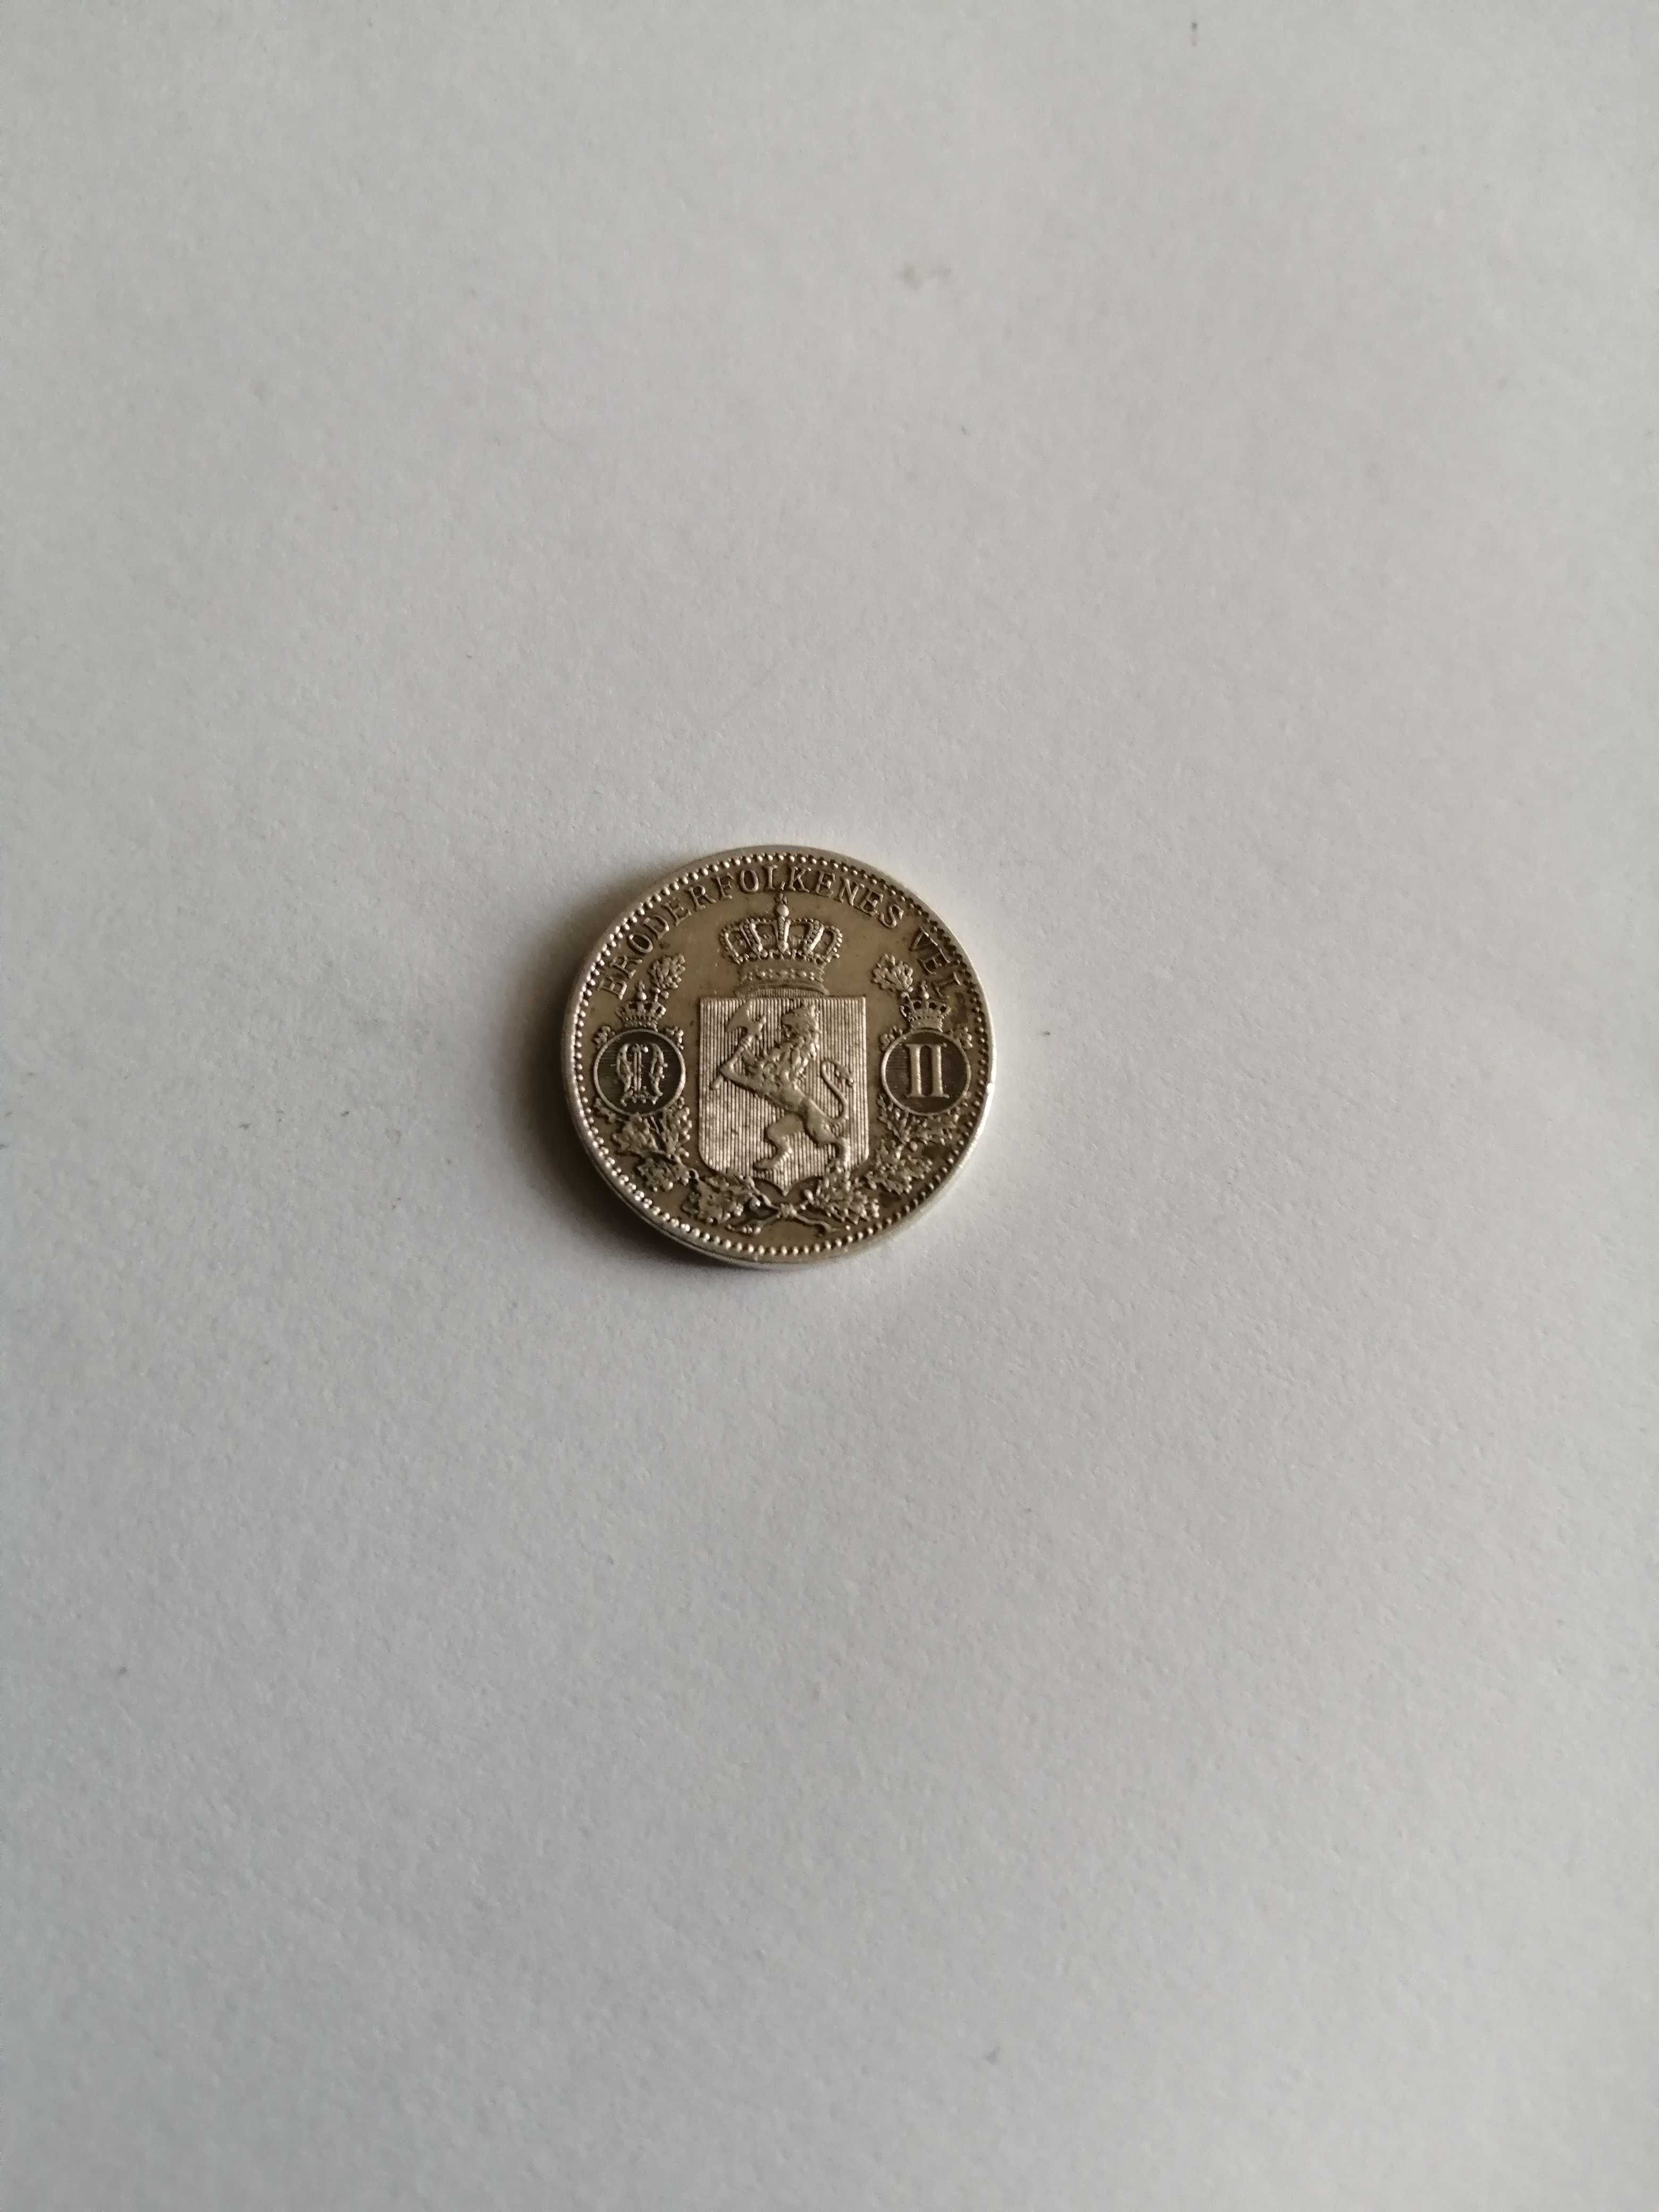 Moneta 25 ore 1896 Norwegia, bardzo rzadka mennicza, 25 Ore Norge 1896